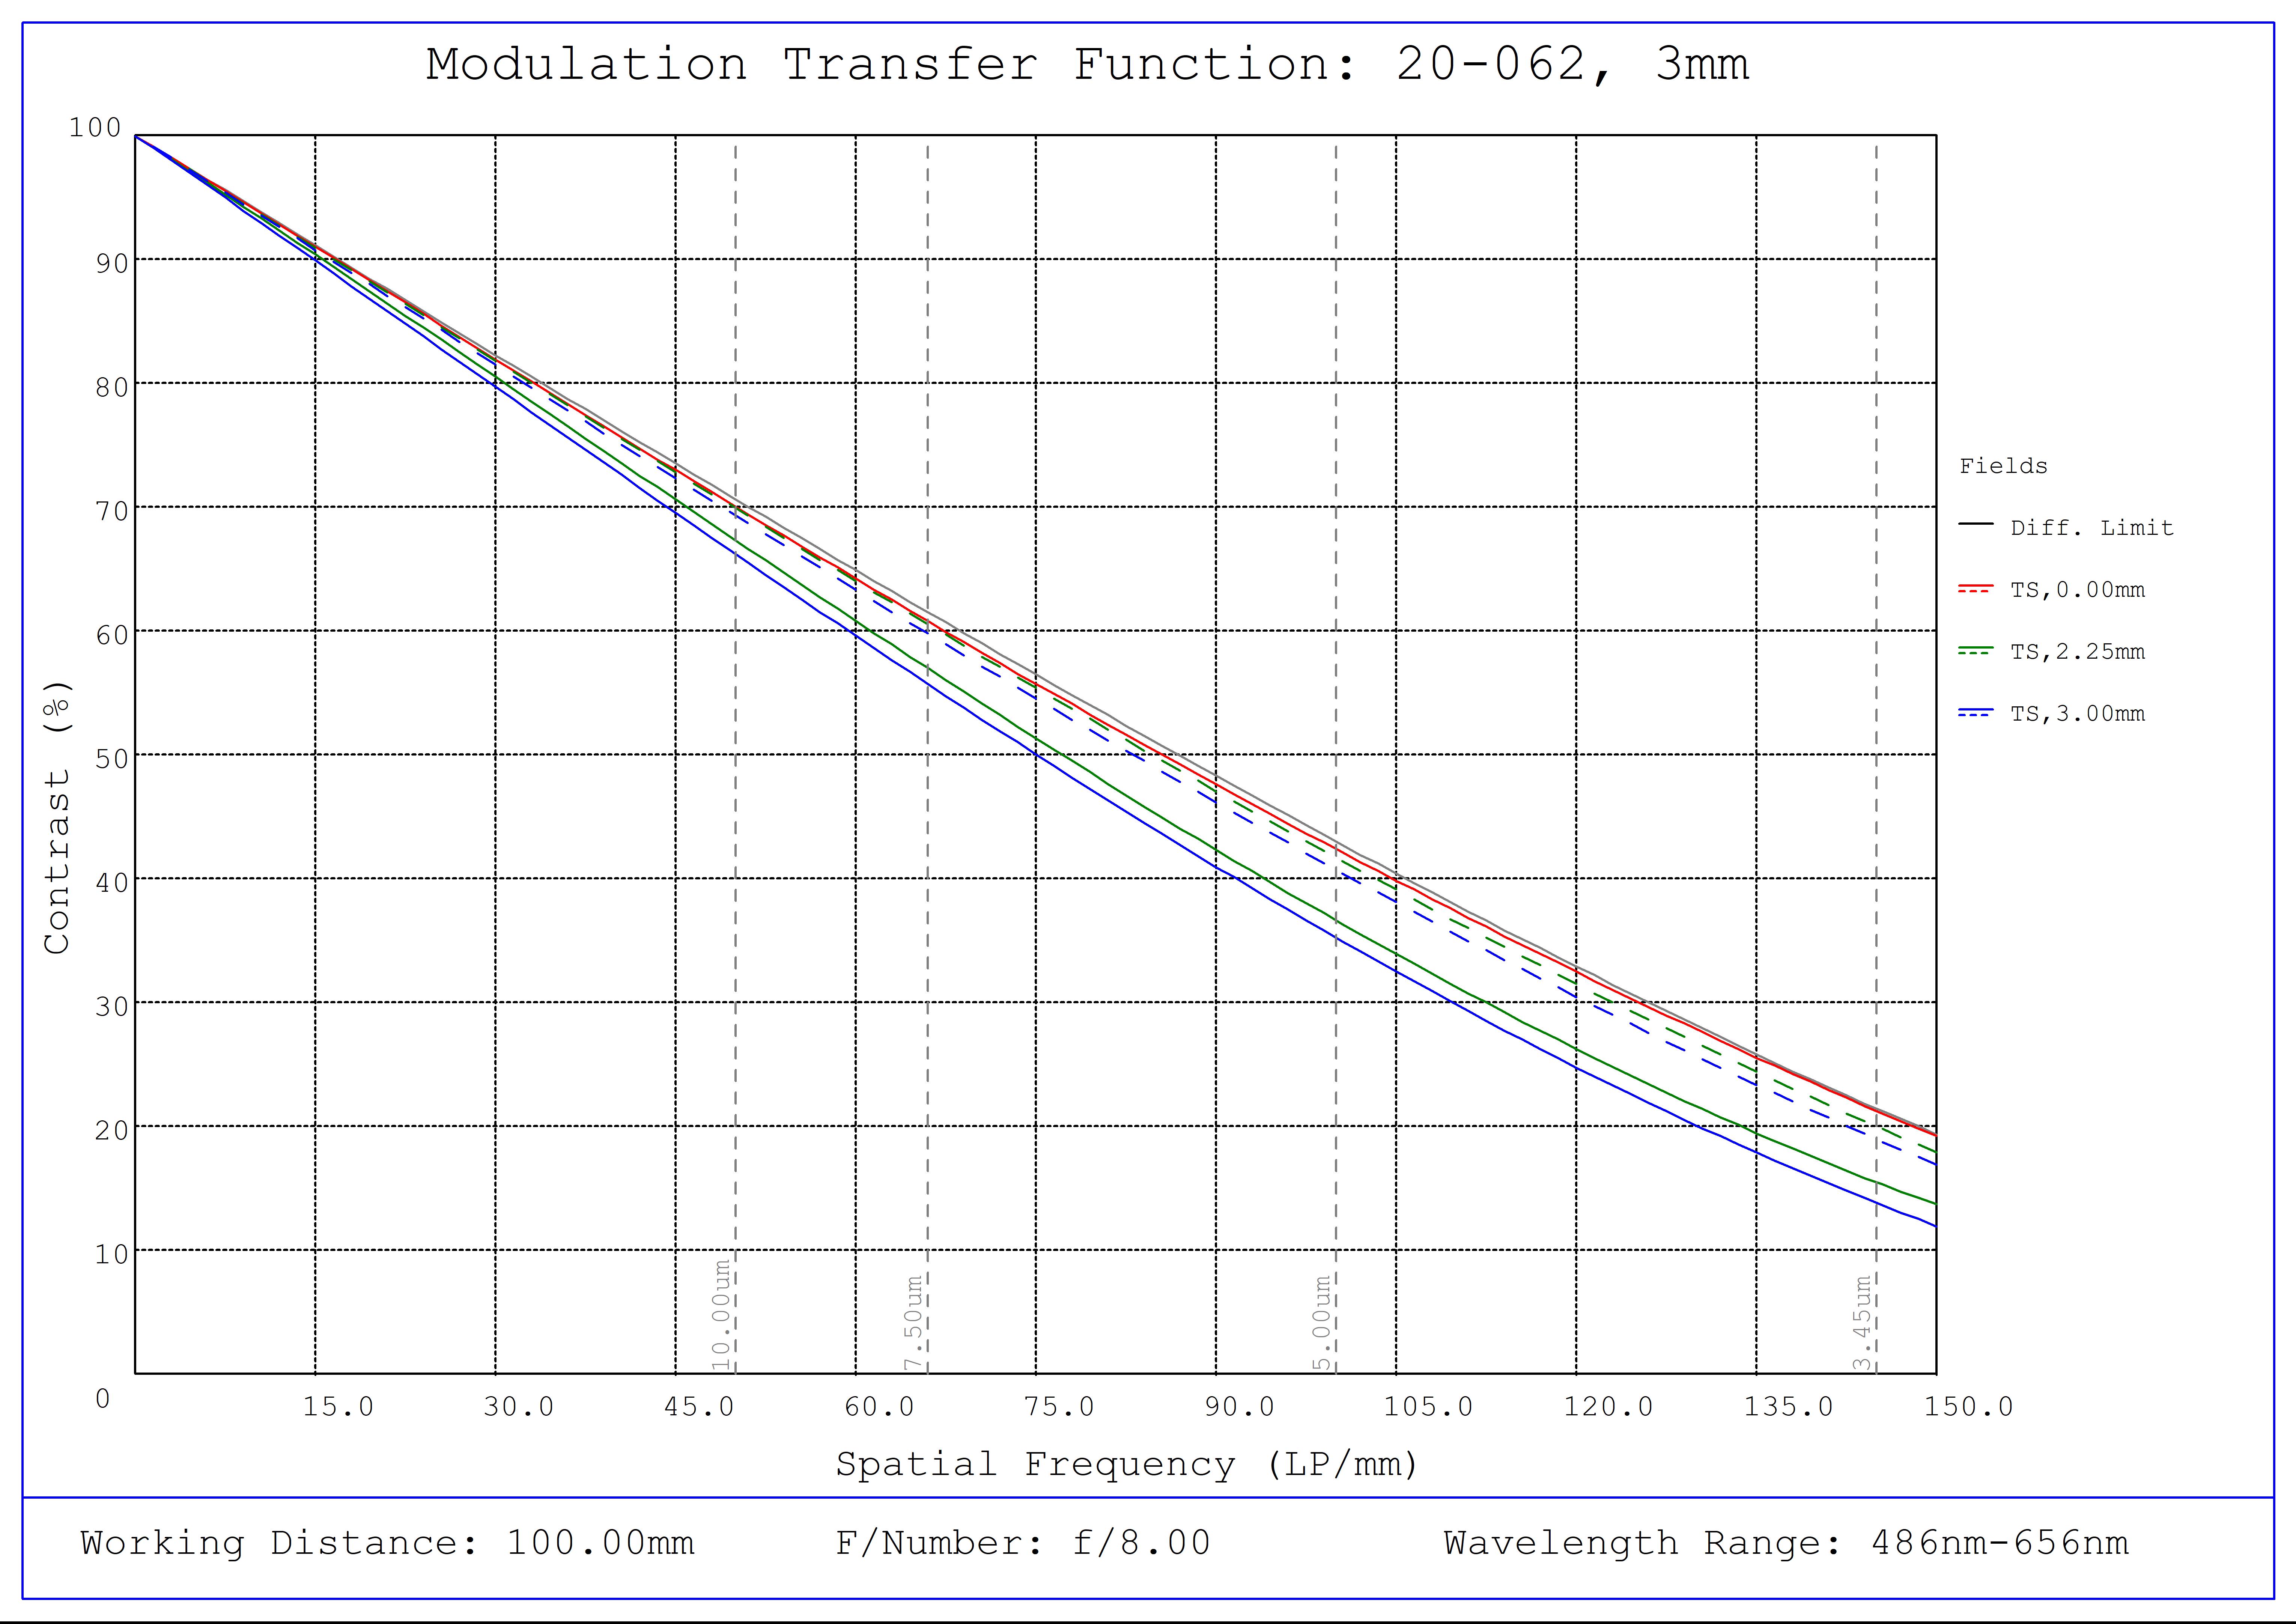 #20-062, 3mm FL f/8.0 IR-Cut Rugged Blue Series M12 Lens, Modulated Transfer Function (MTF) Plot, 100mm Working Distance, f8